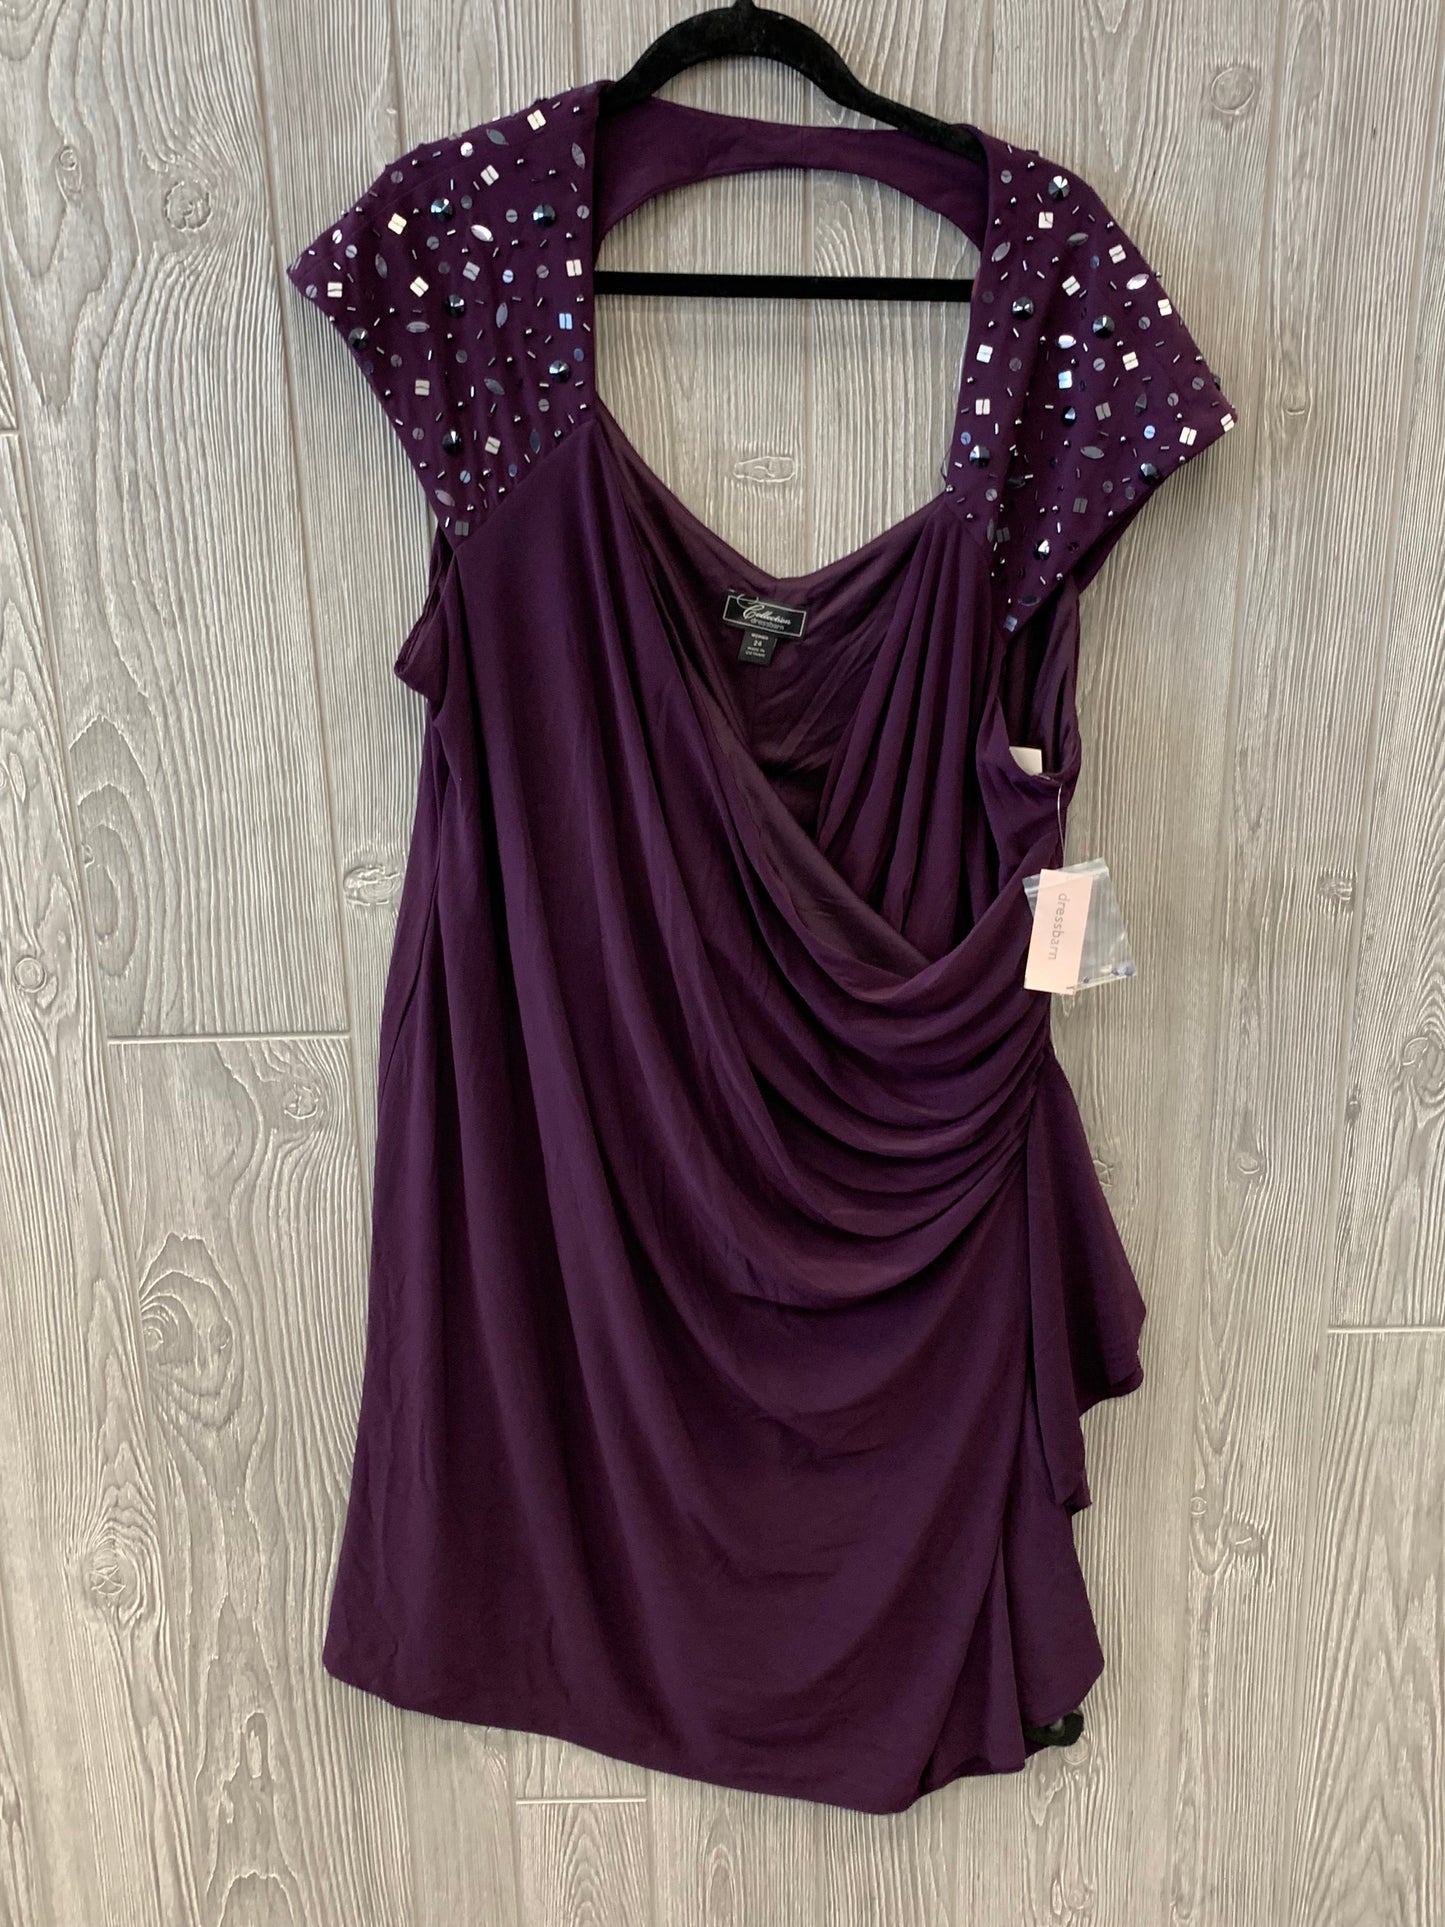 Purple Dress Party Midi Clothes Mentor, Size 3x